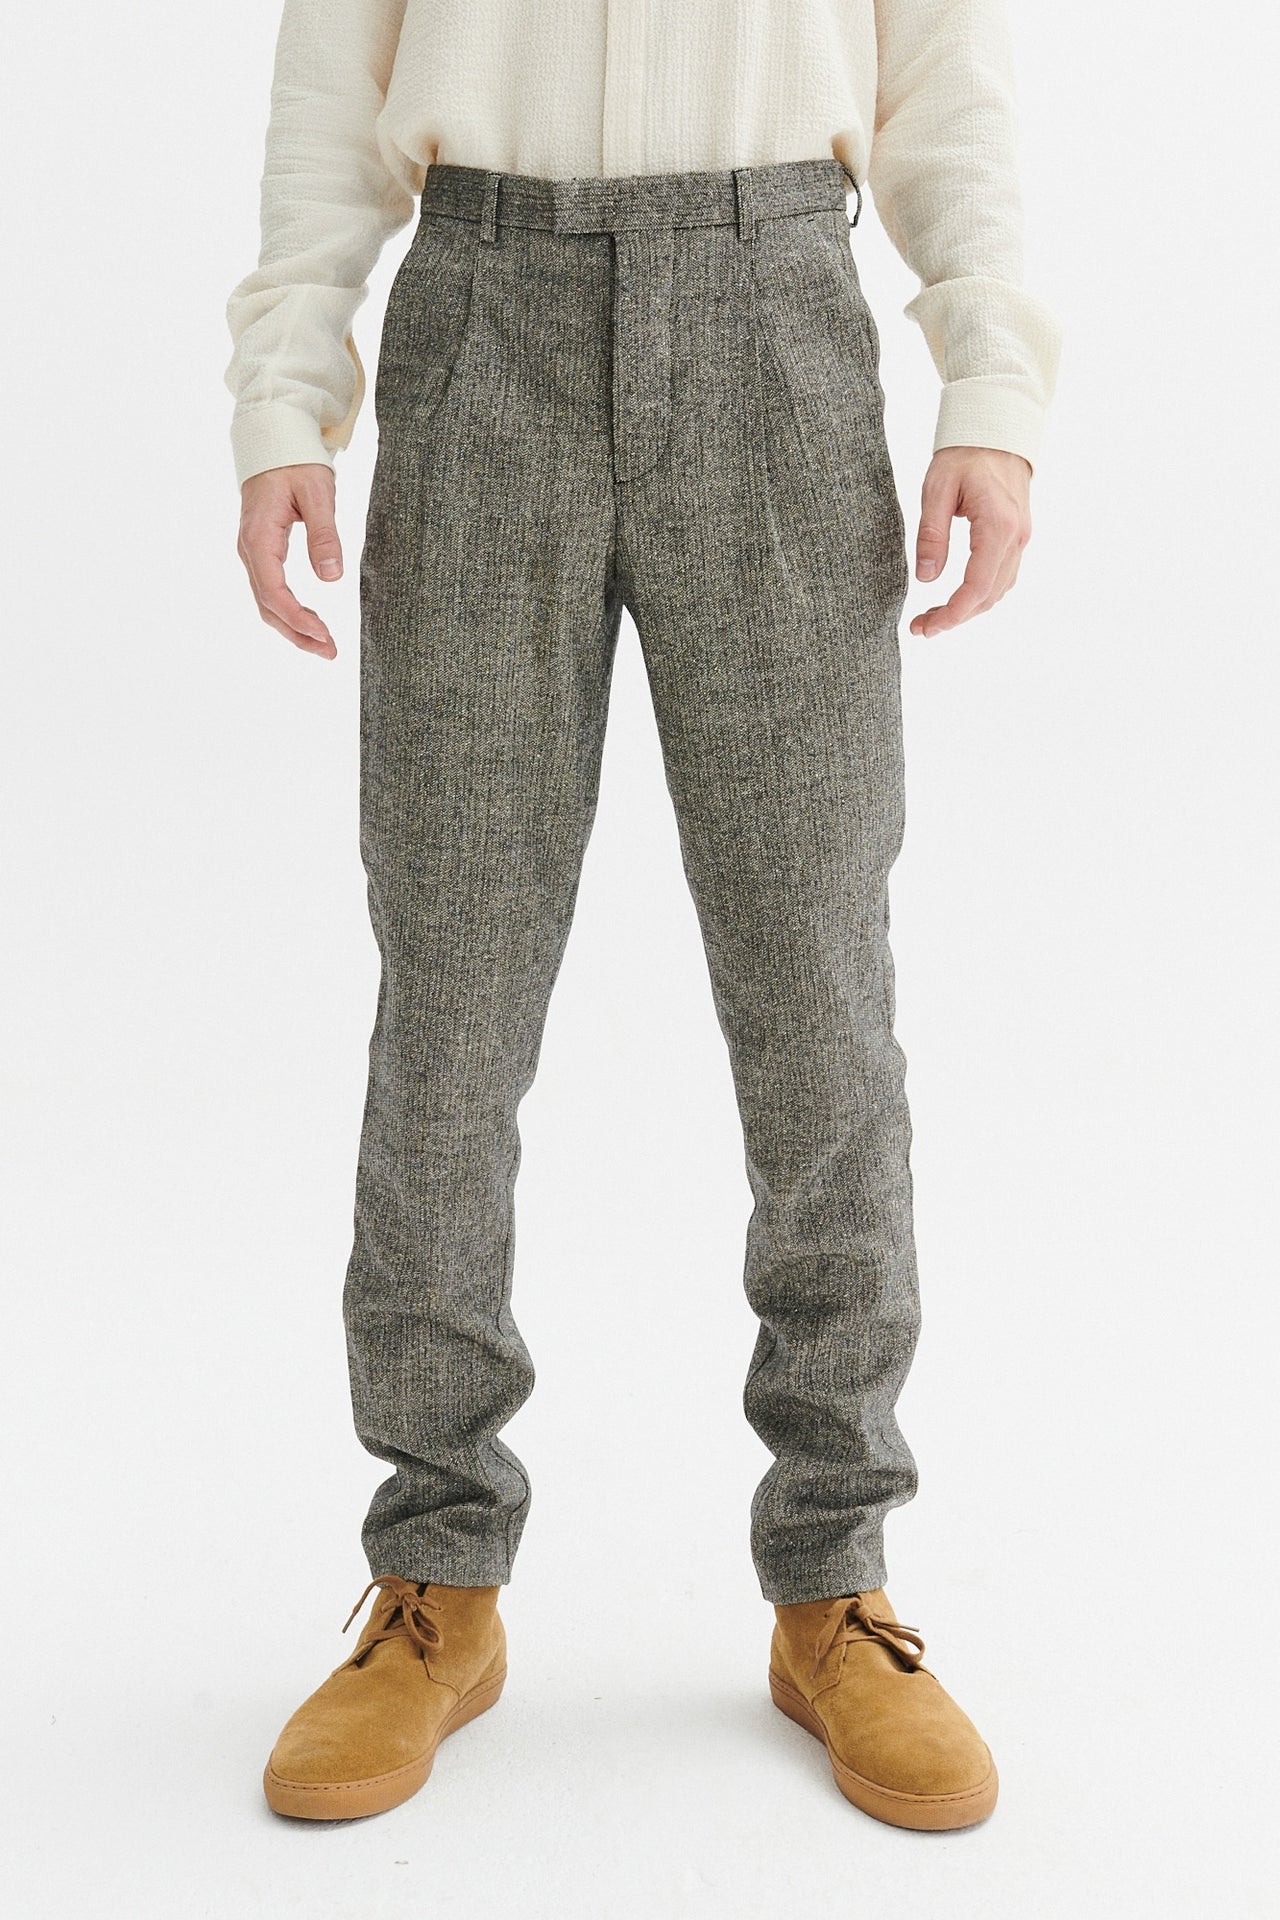 Bohemian Trousers in the Finest Grey Herringbone Italian Wool and Silk Blend